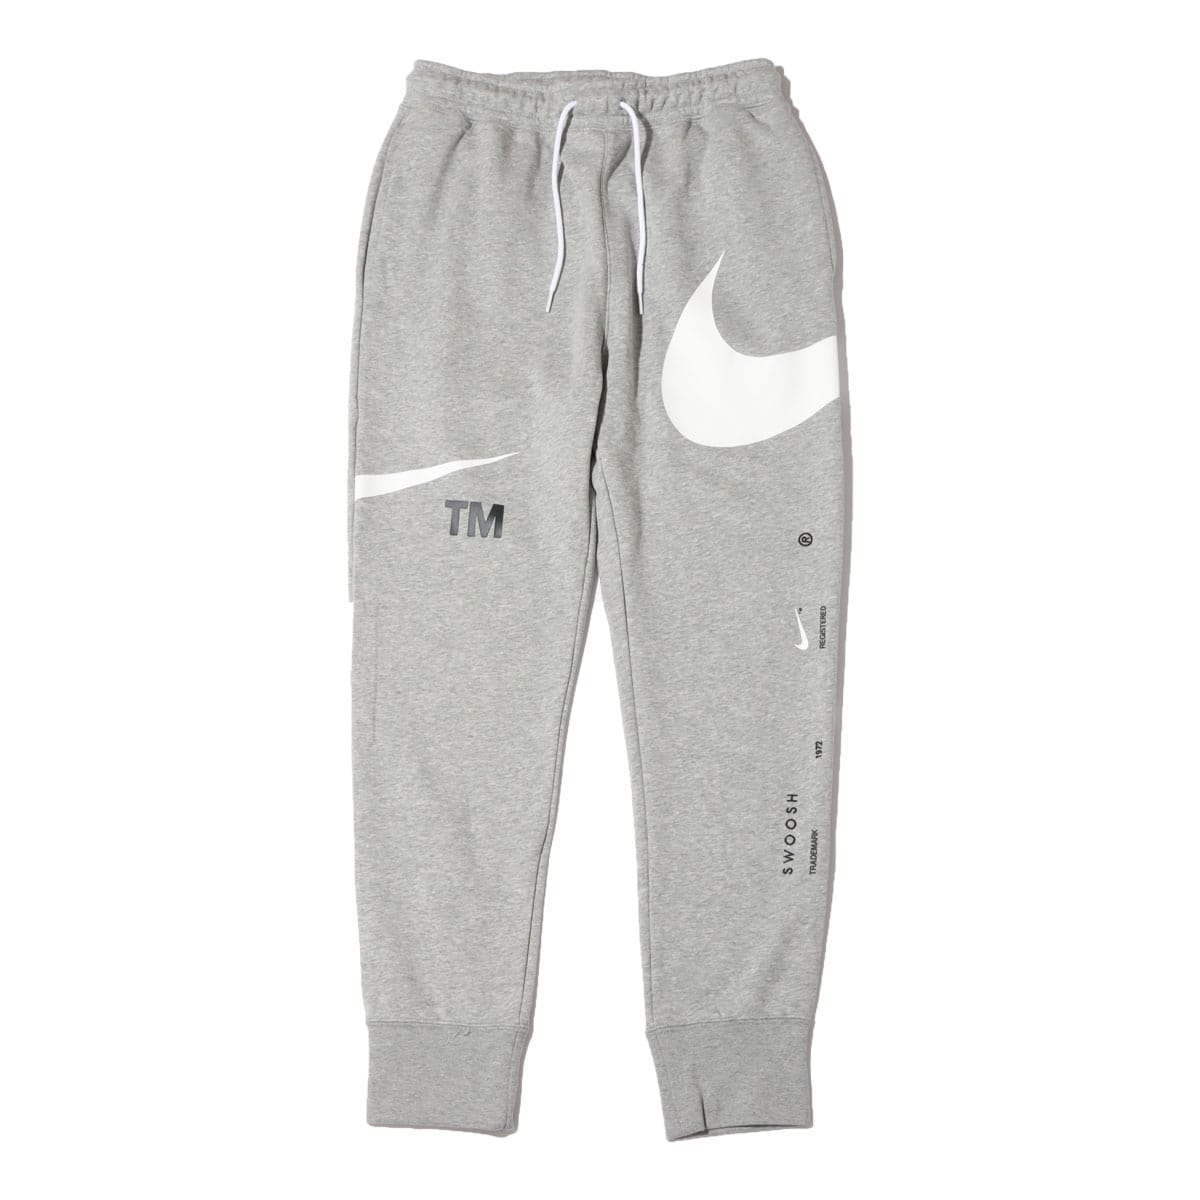 Nike swoosh pants スウェット パンツ M